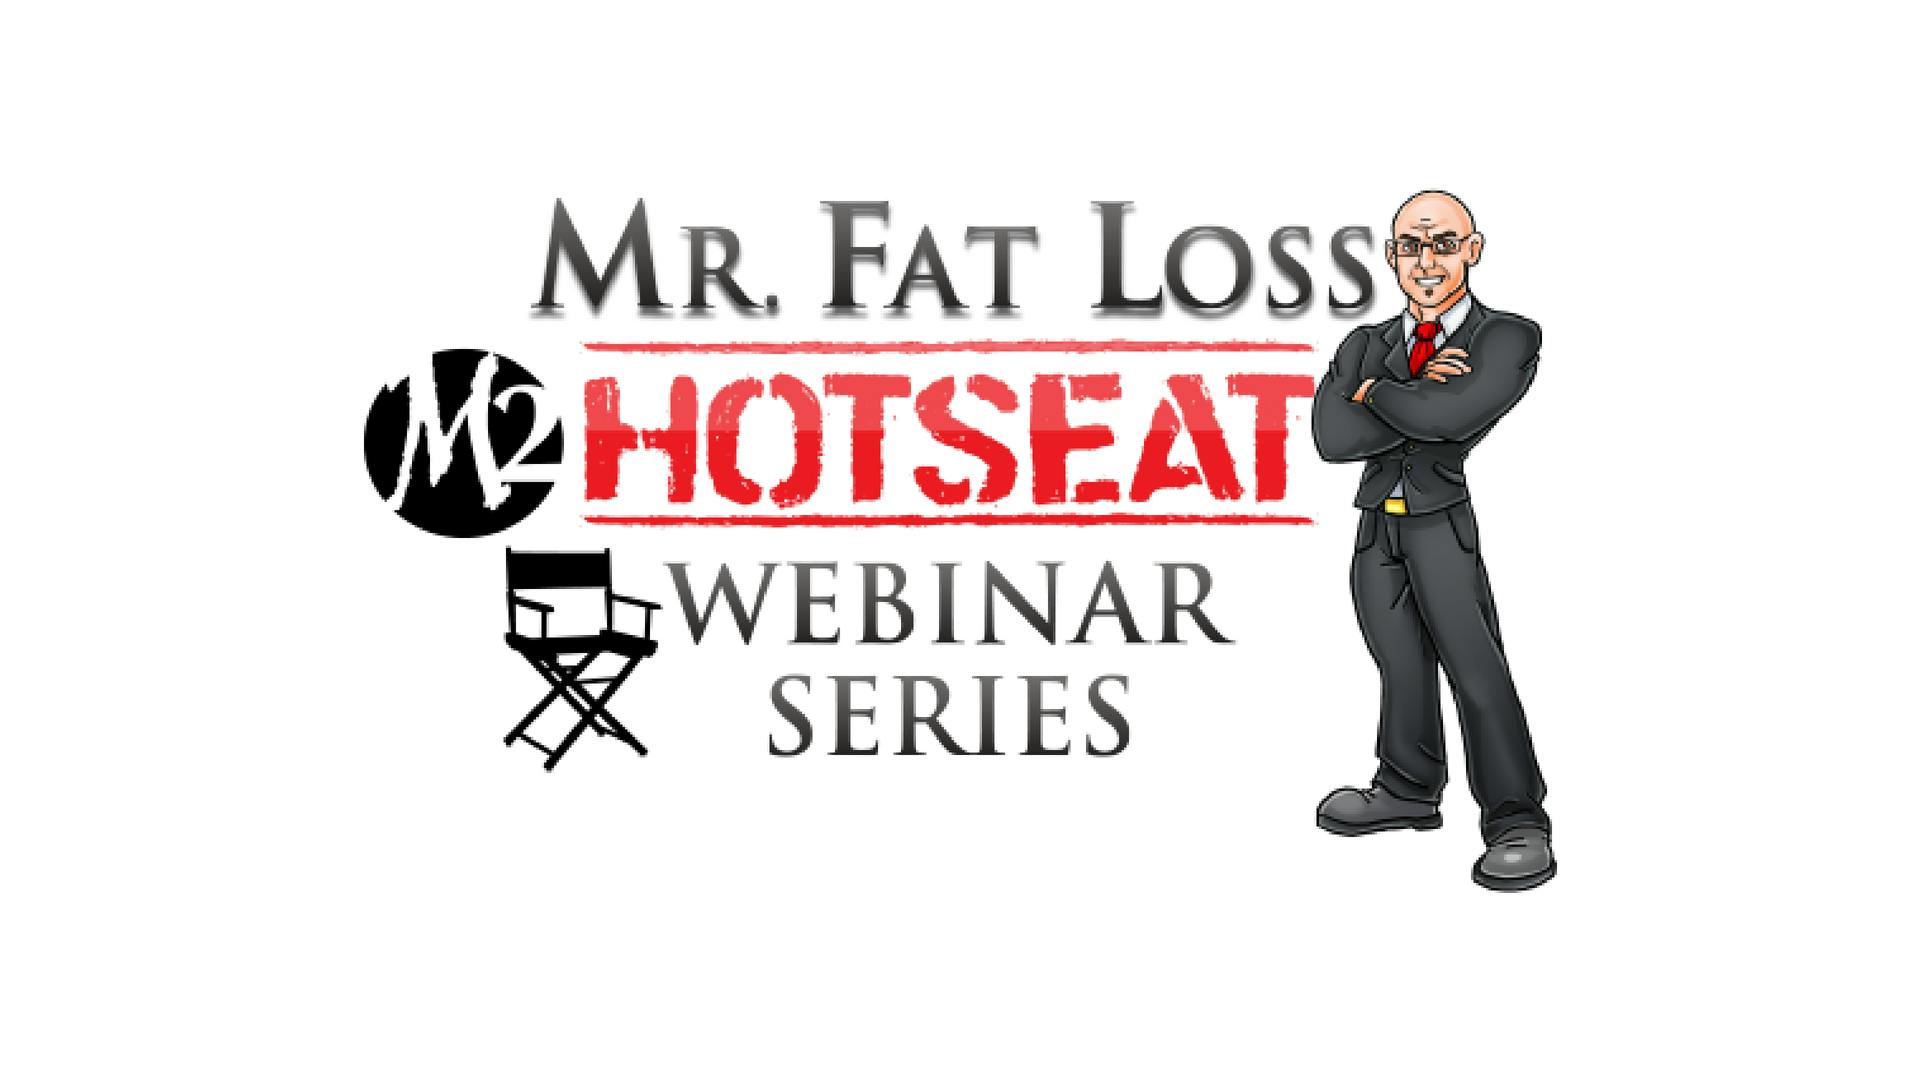 Fat Loss Hot Seat Webinar with Celebrity Trainer Emile Jarreau aka Mr.Fat Loss